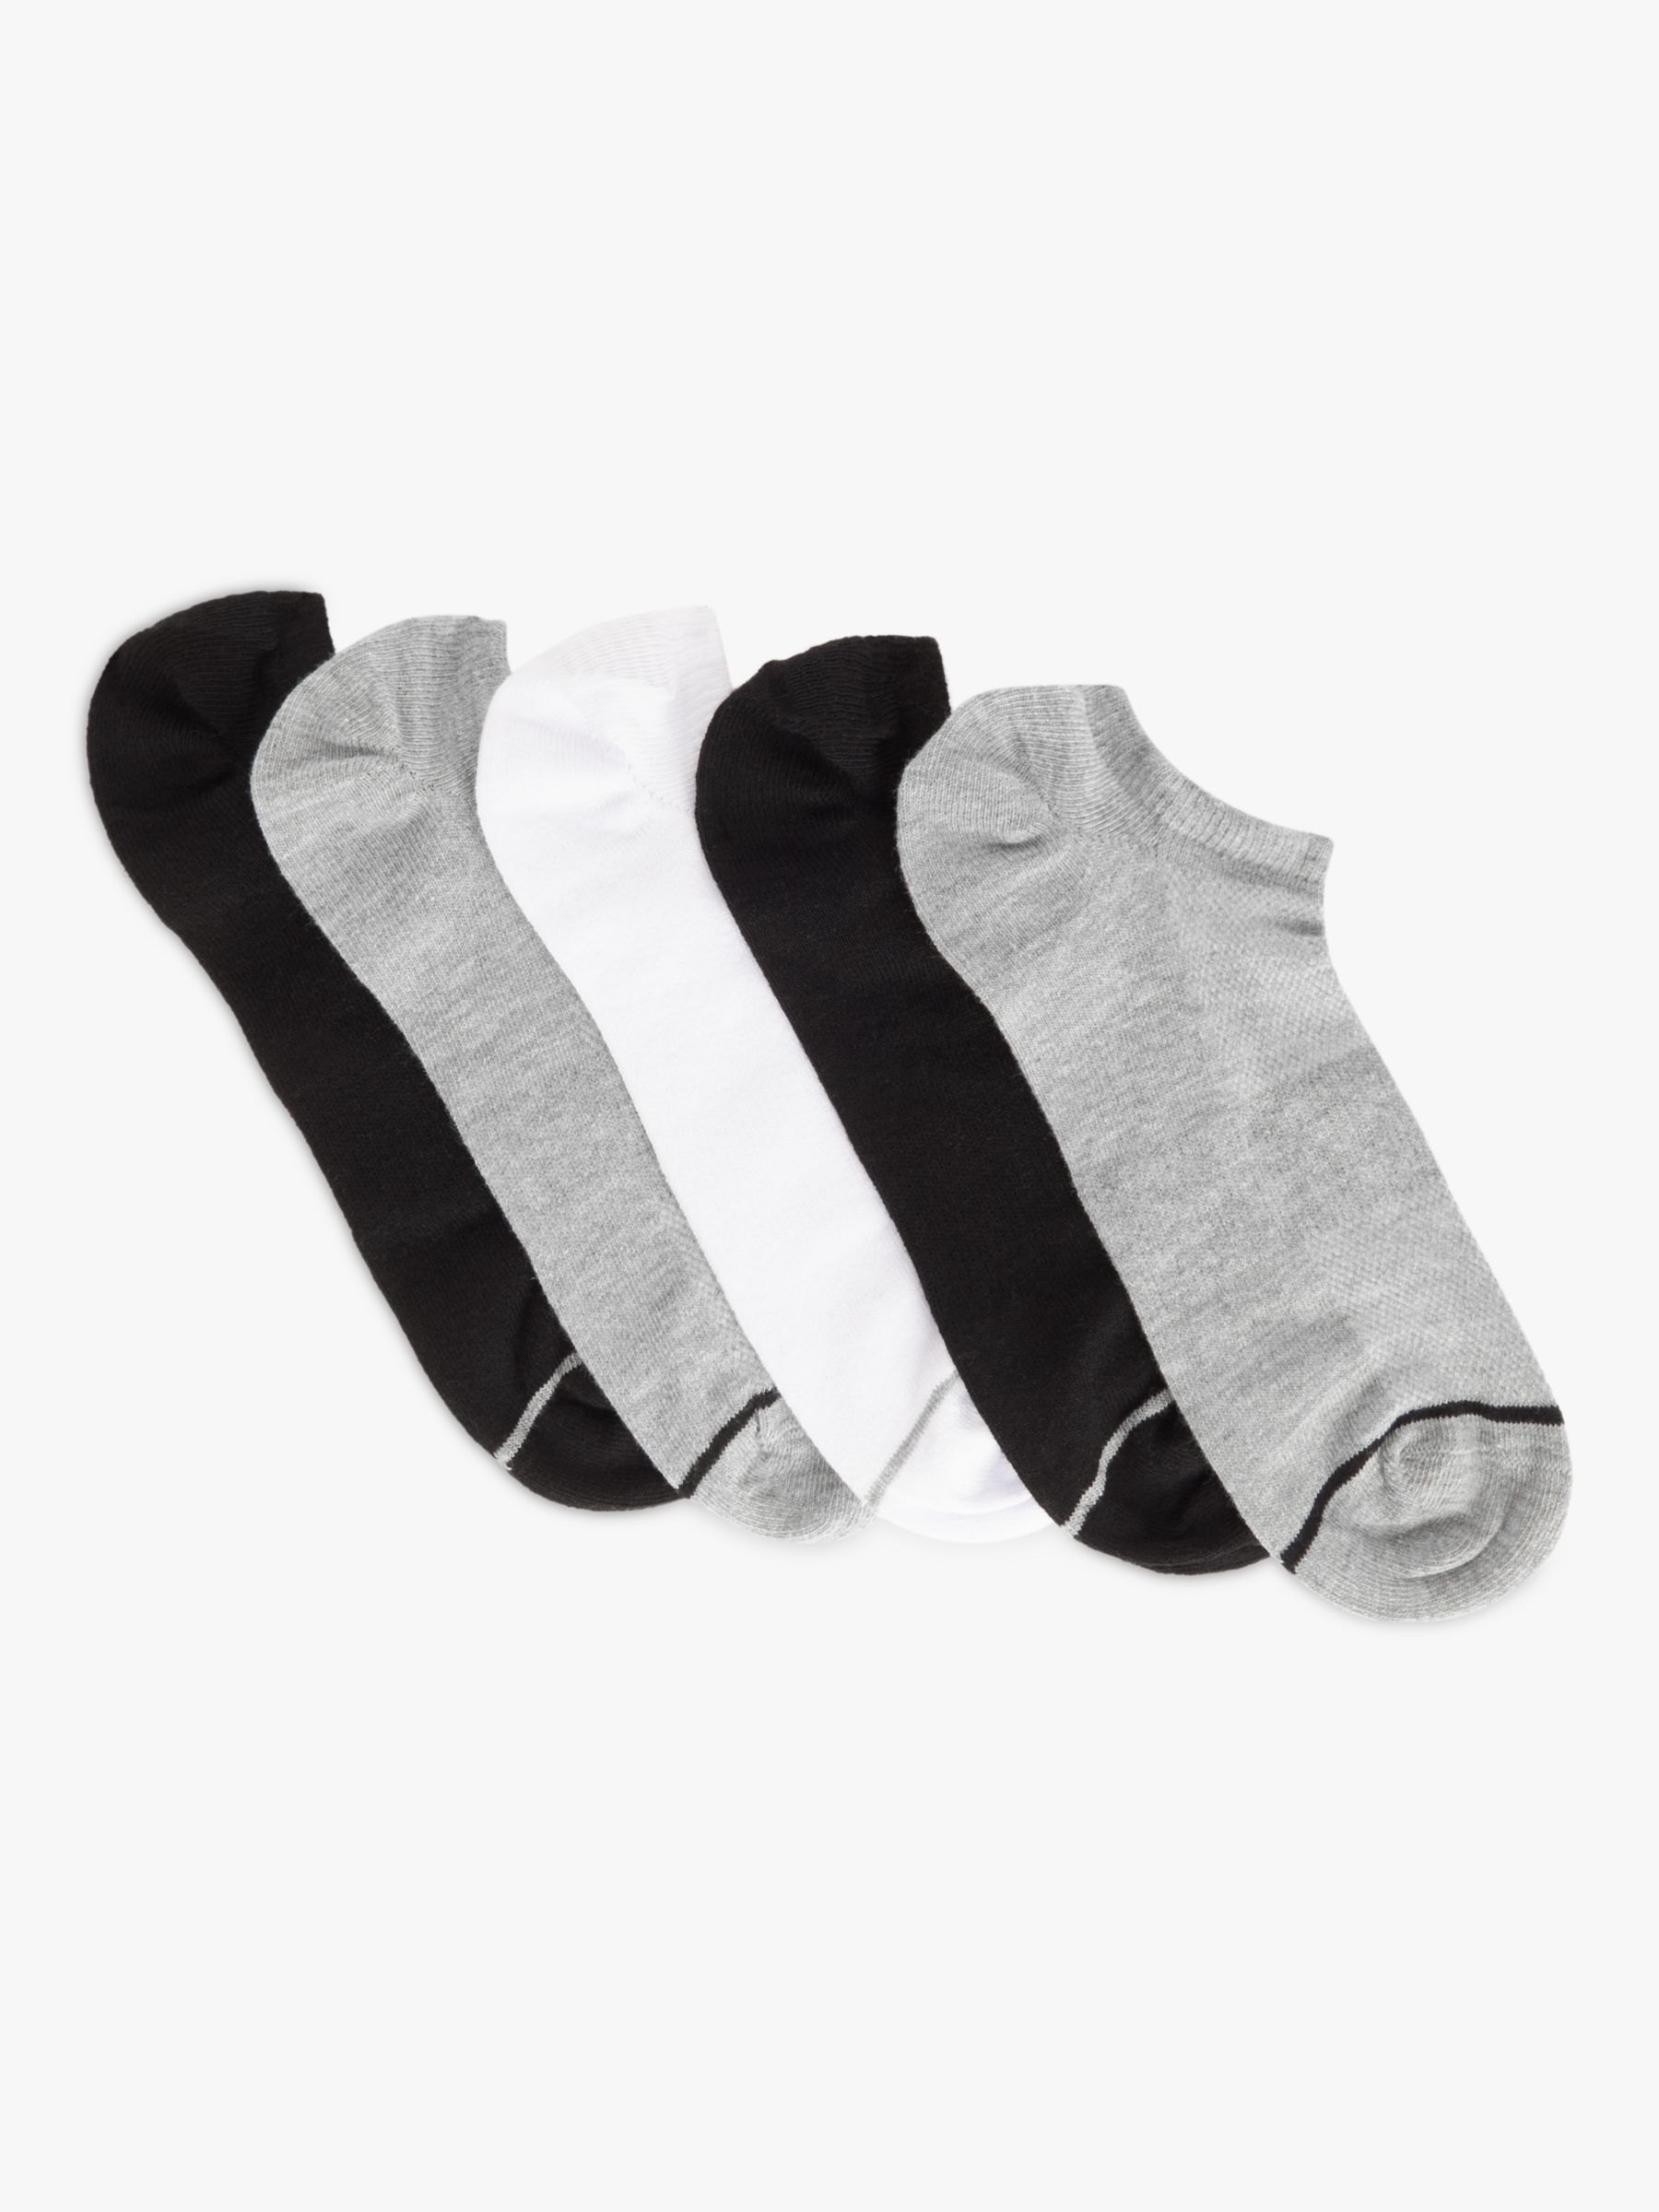 John Lewis ANYDAY Plain Trainer Liner Socks, Pack of 5, Black/White/Grey at  John Lewis & Partners